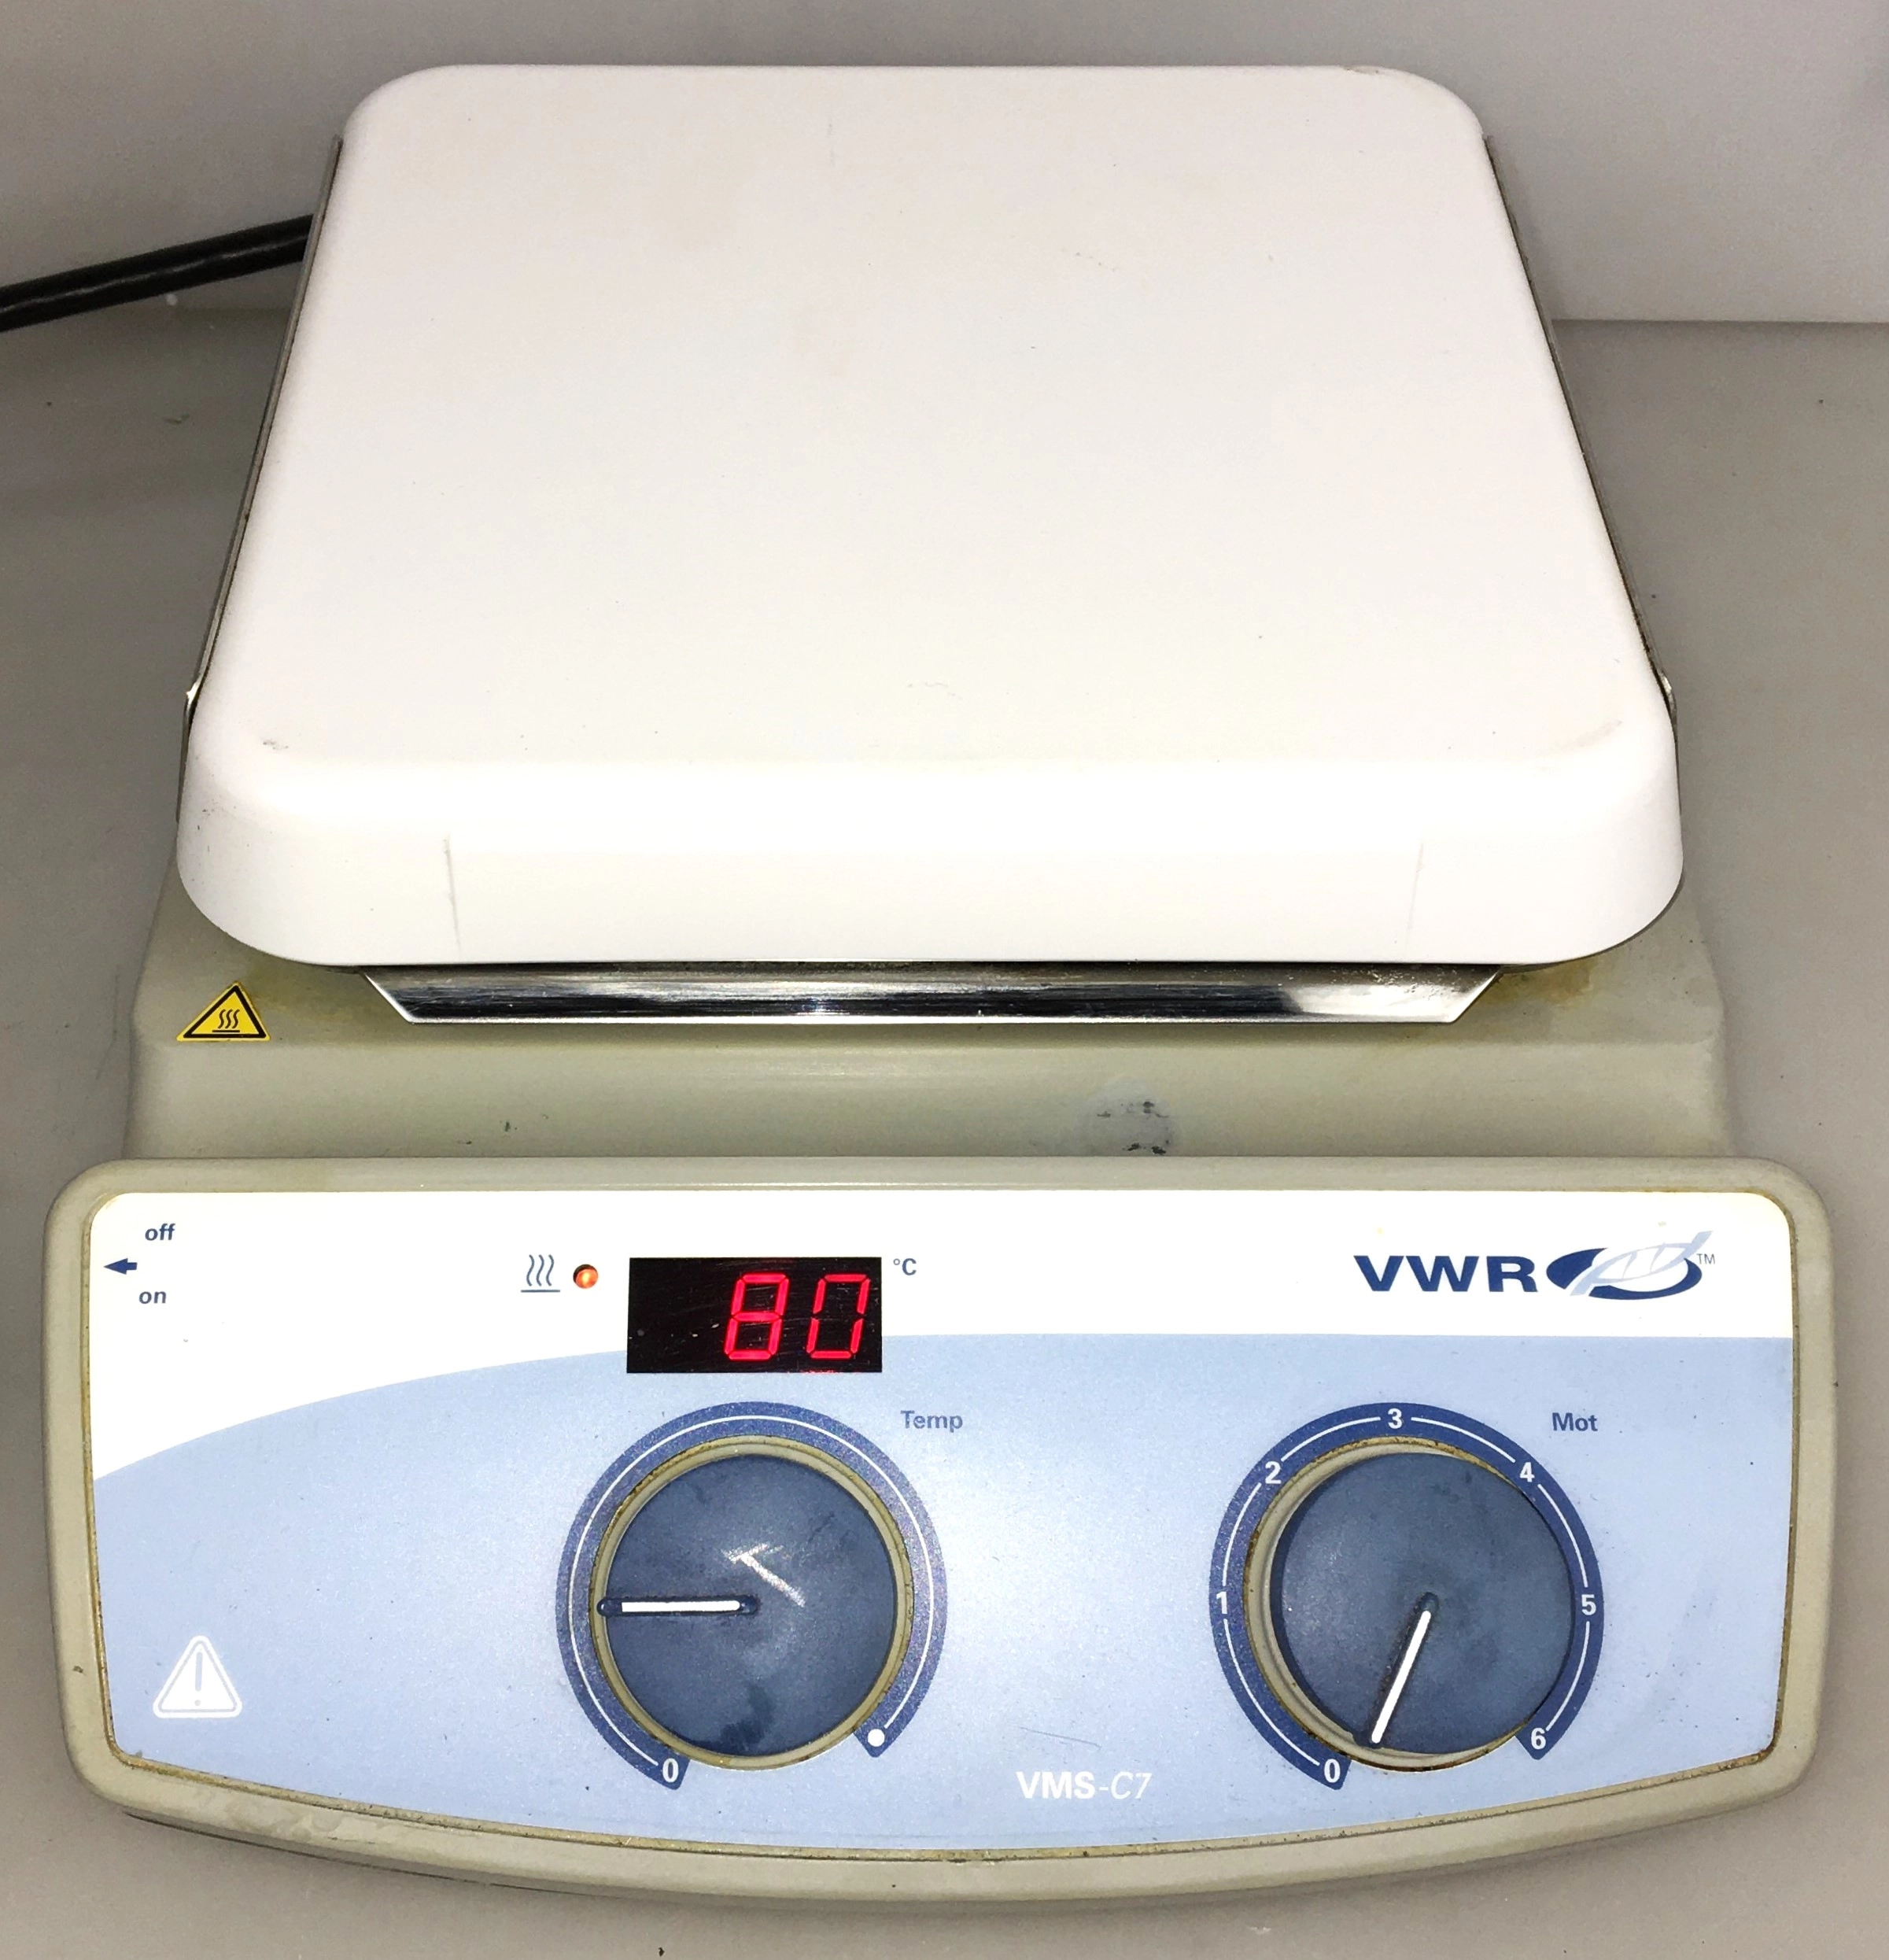 VWR (IKA) VMS-C7 S1 Digital Stirring Hot Plate (7" x 7" Plate)